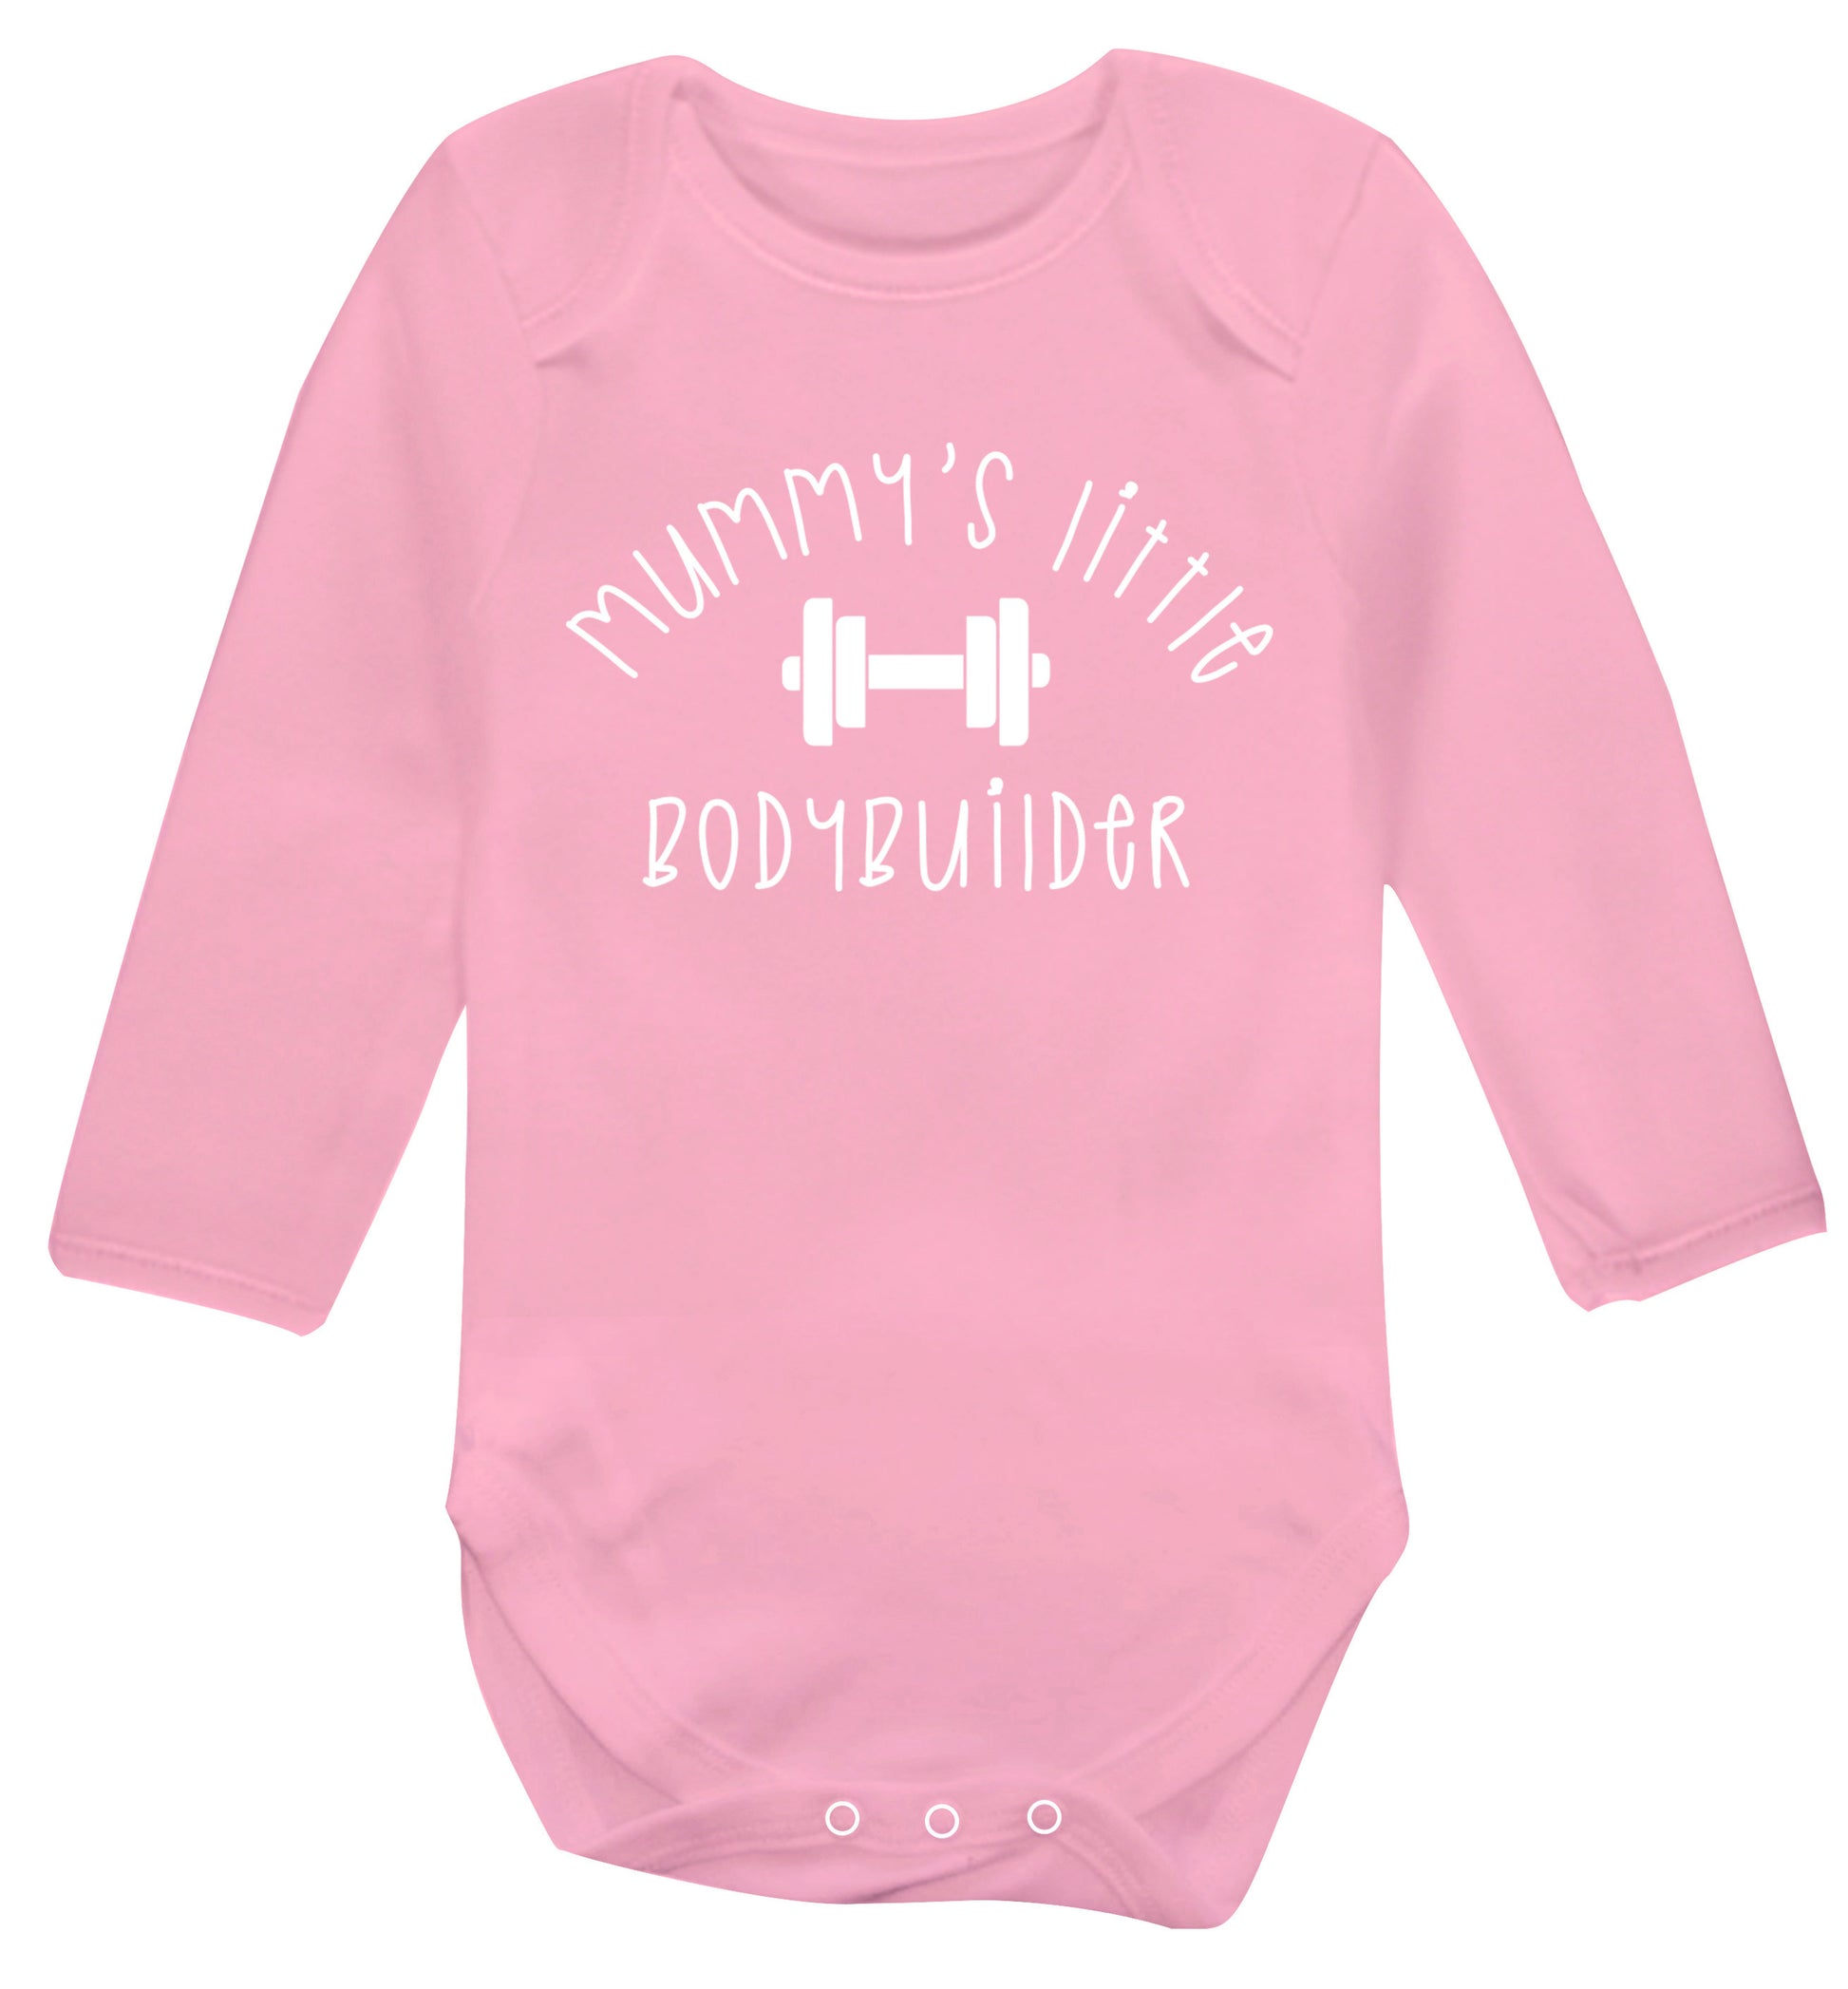 Mummy's little bodybuilder Baby Vest long sleeved pale pink 6-12 months